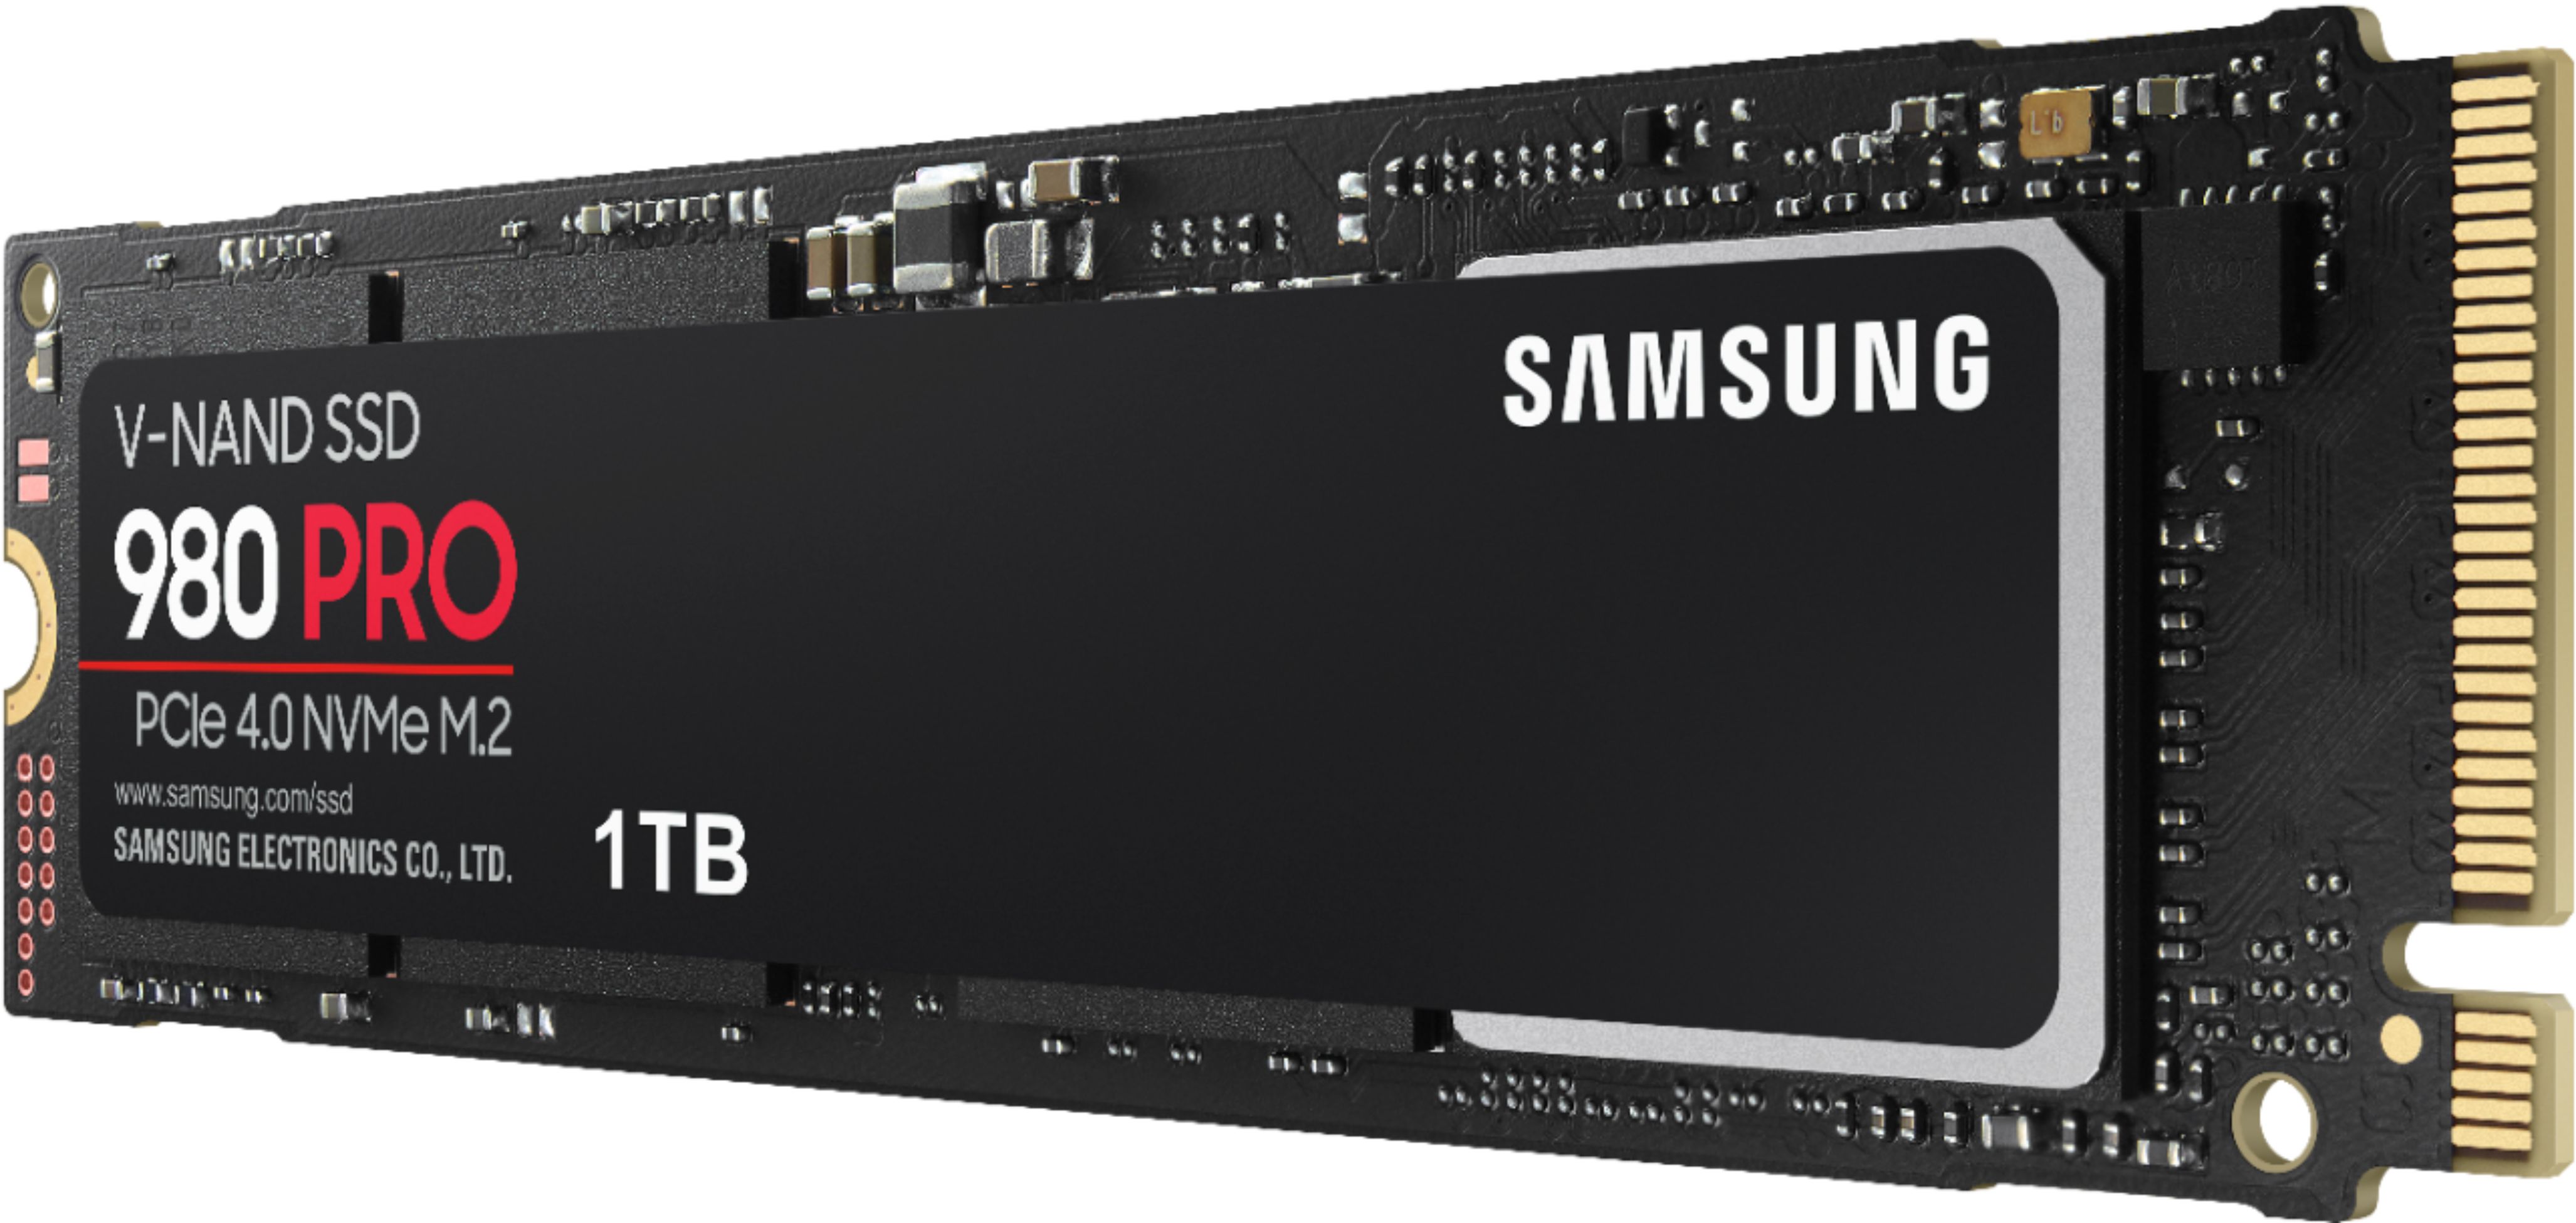 Samsung 980 PRO 1TB Internal Gaming SSD PCIe Gen 4 x4 NVMe MZ